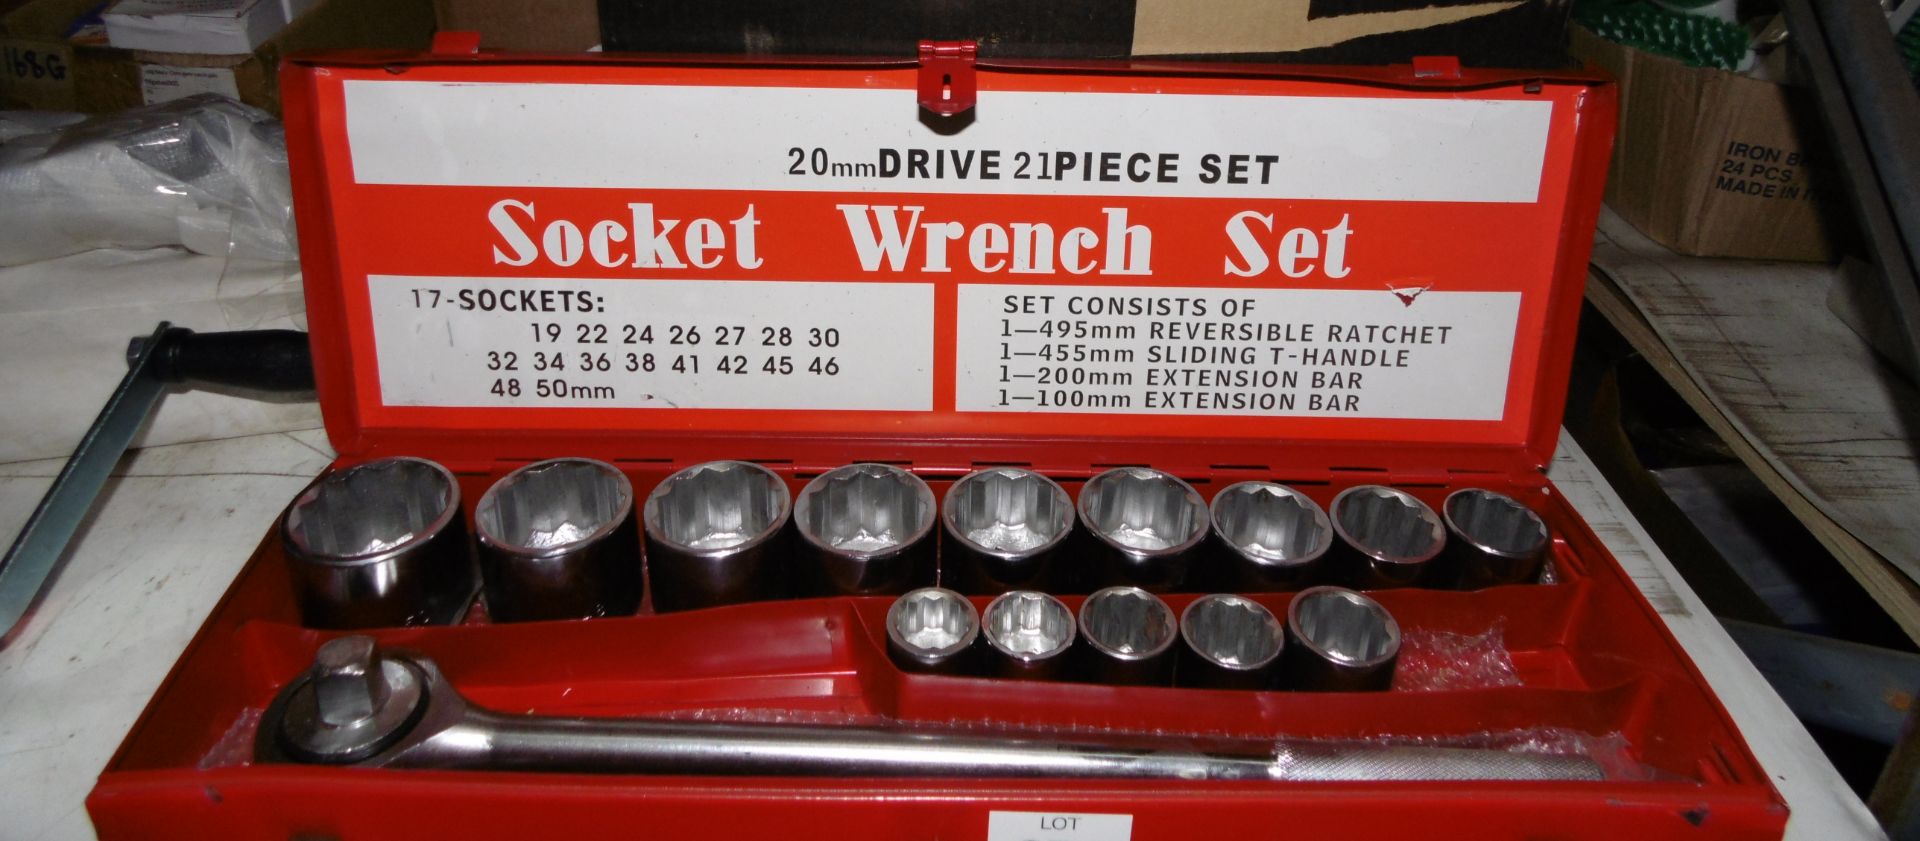 * 21 Piece socket wrench set